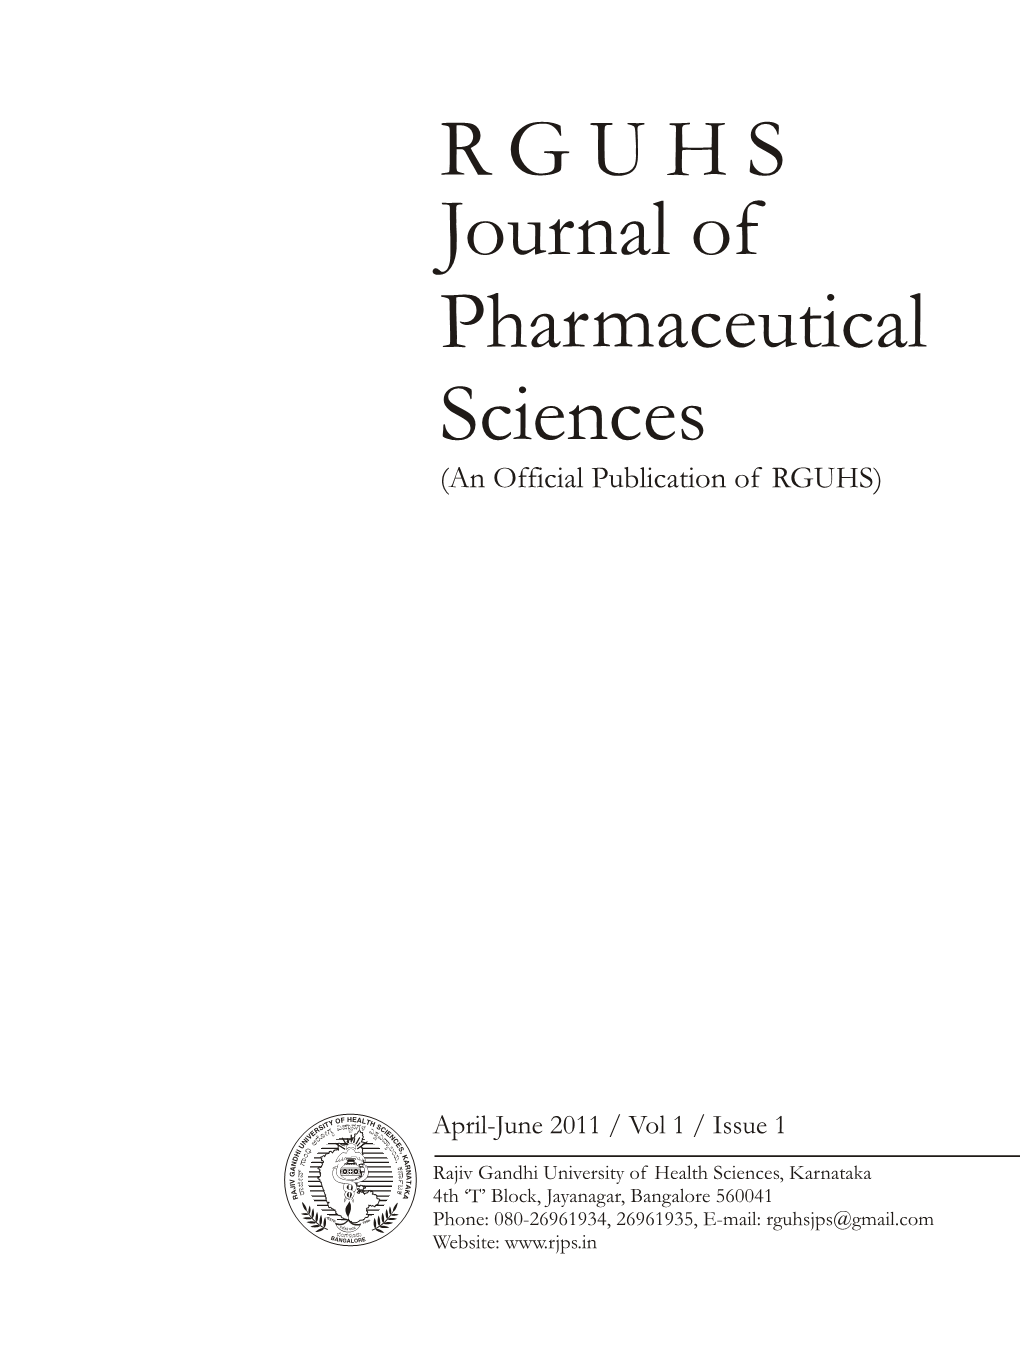 RGUHS Journal of Pharmaceutical Sciences RJPS Contents Vice-Chancellor’S Message